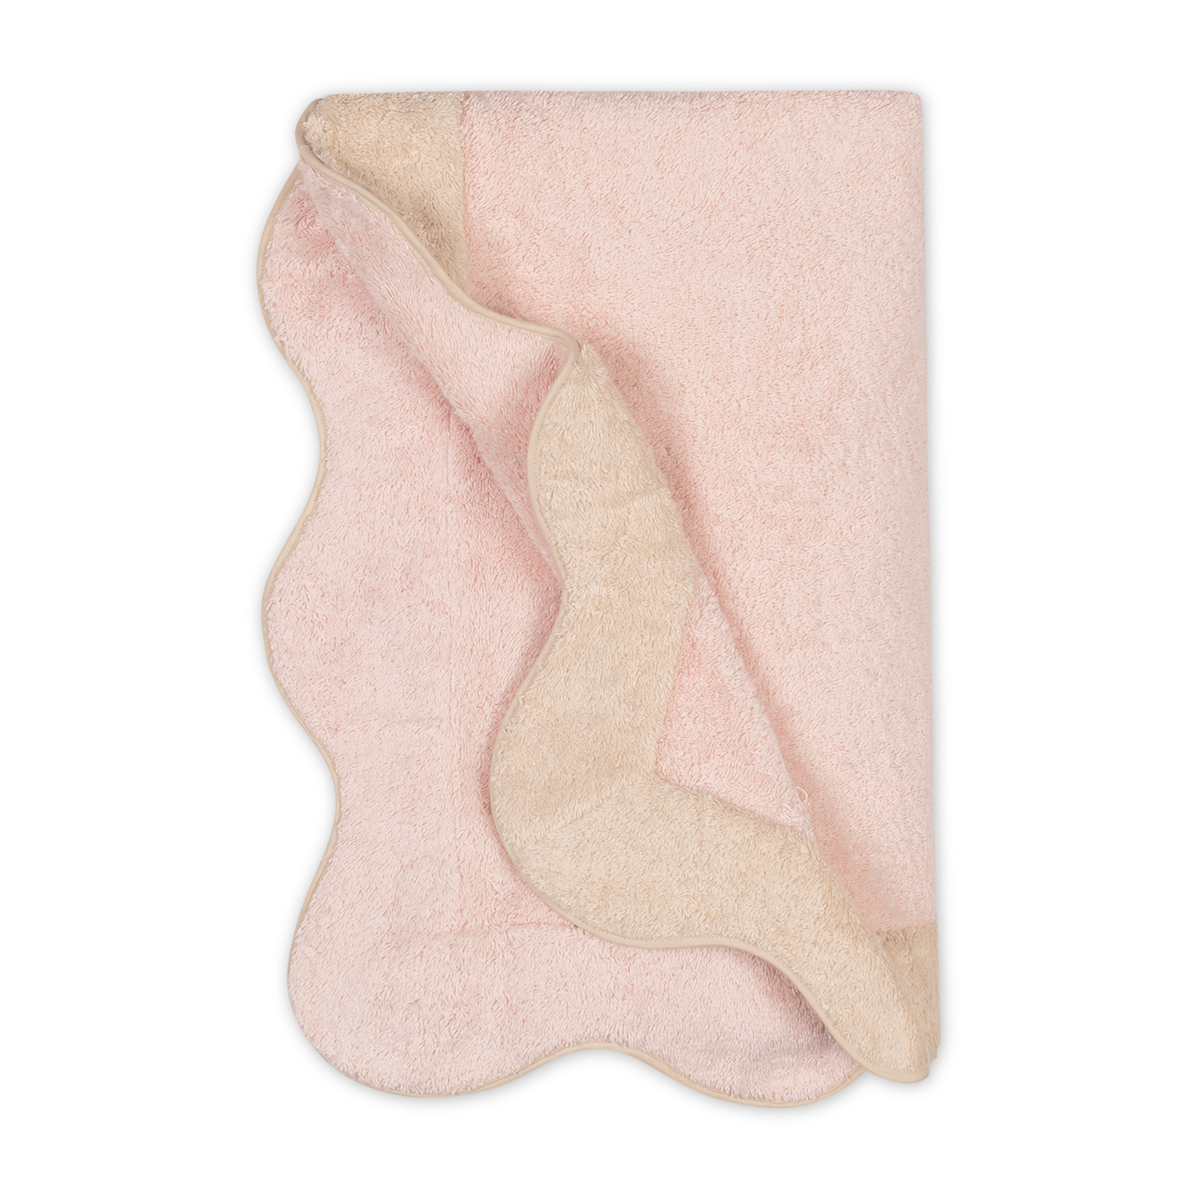 Folded Matouk Neptune Beach Towels in Blush/Sand Color